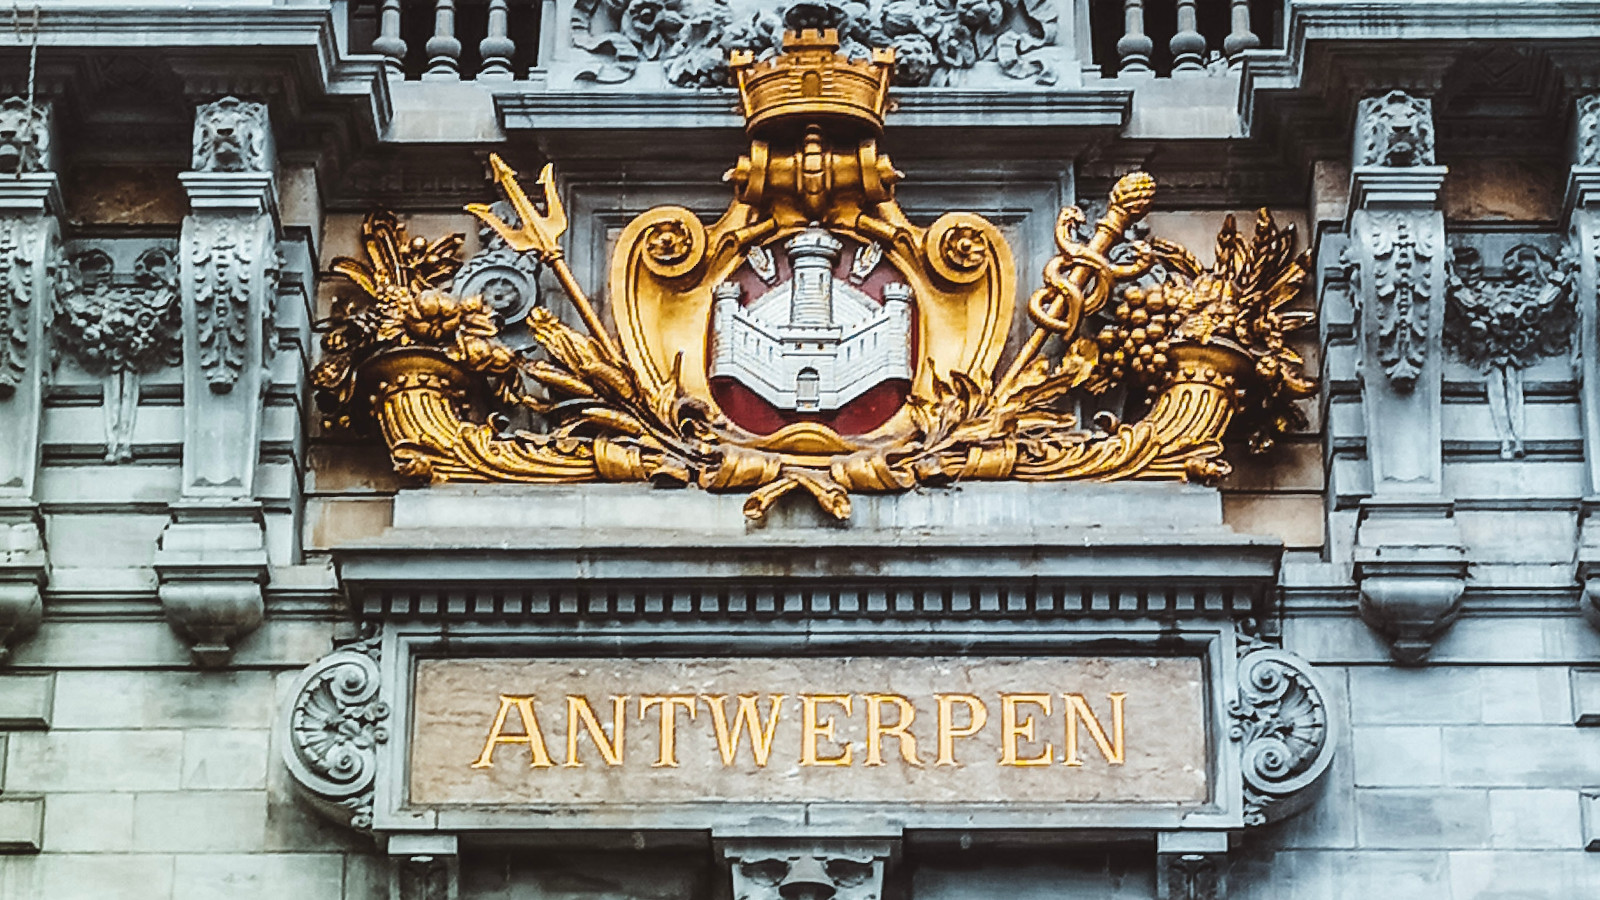 Stasiun kereta api Antwerp